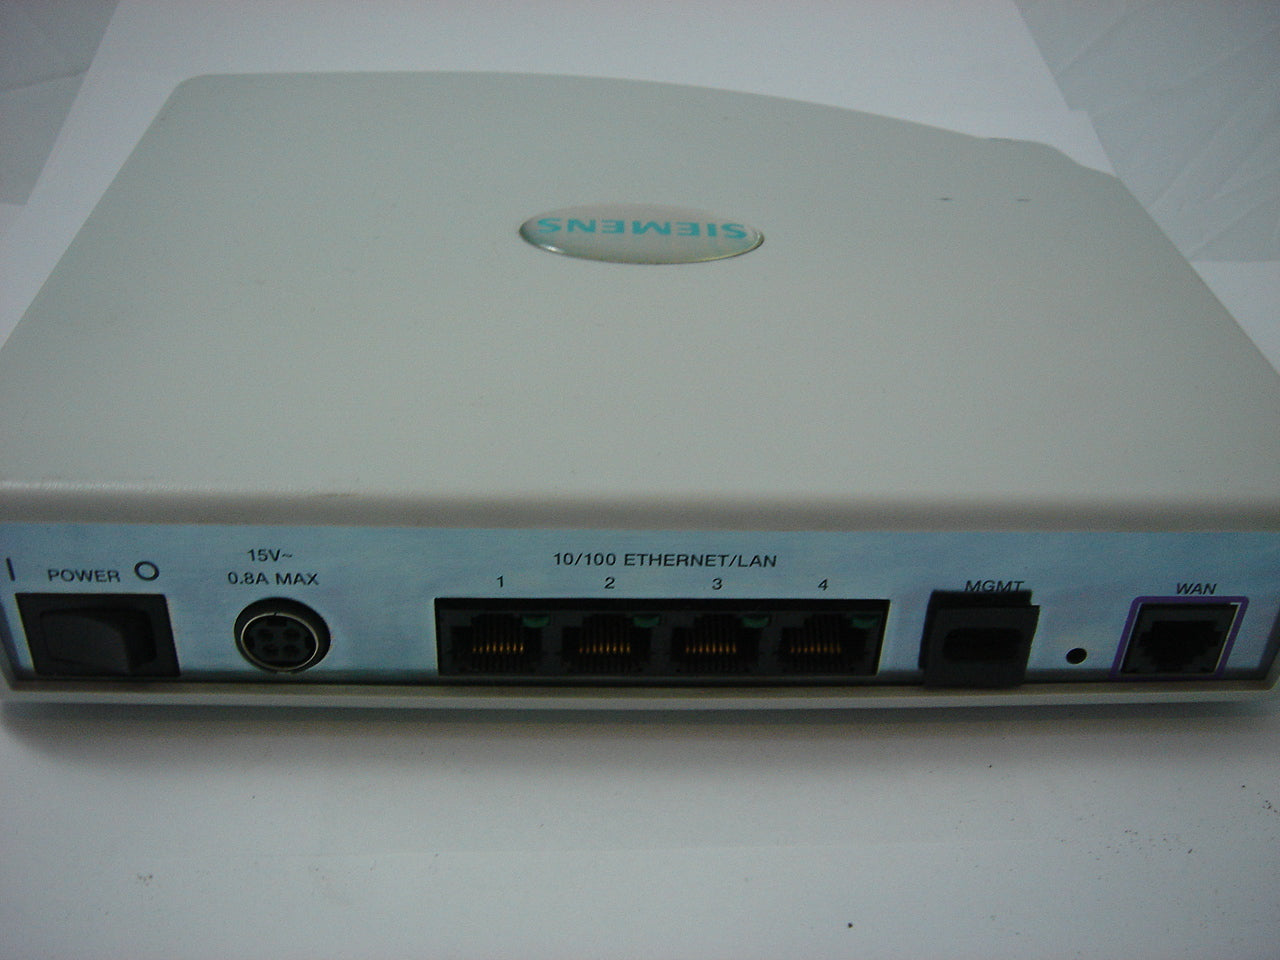 PR02410_060-5830-F03_Siemens 4 Port Ethernet Hub - Image4